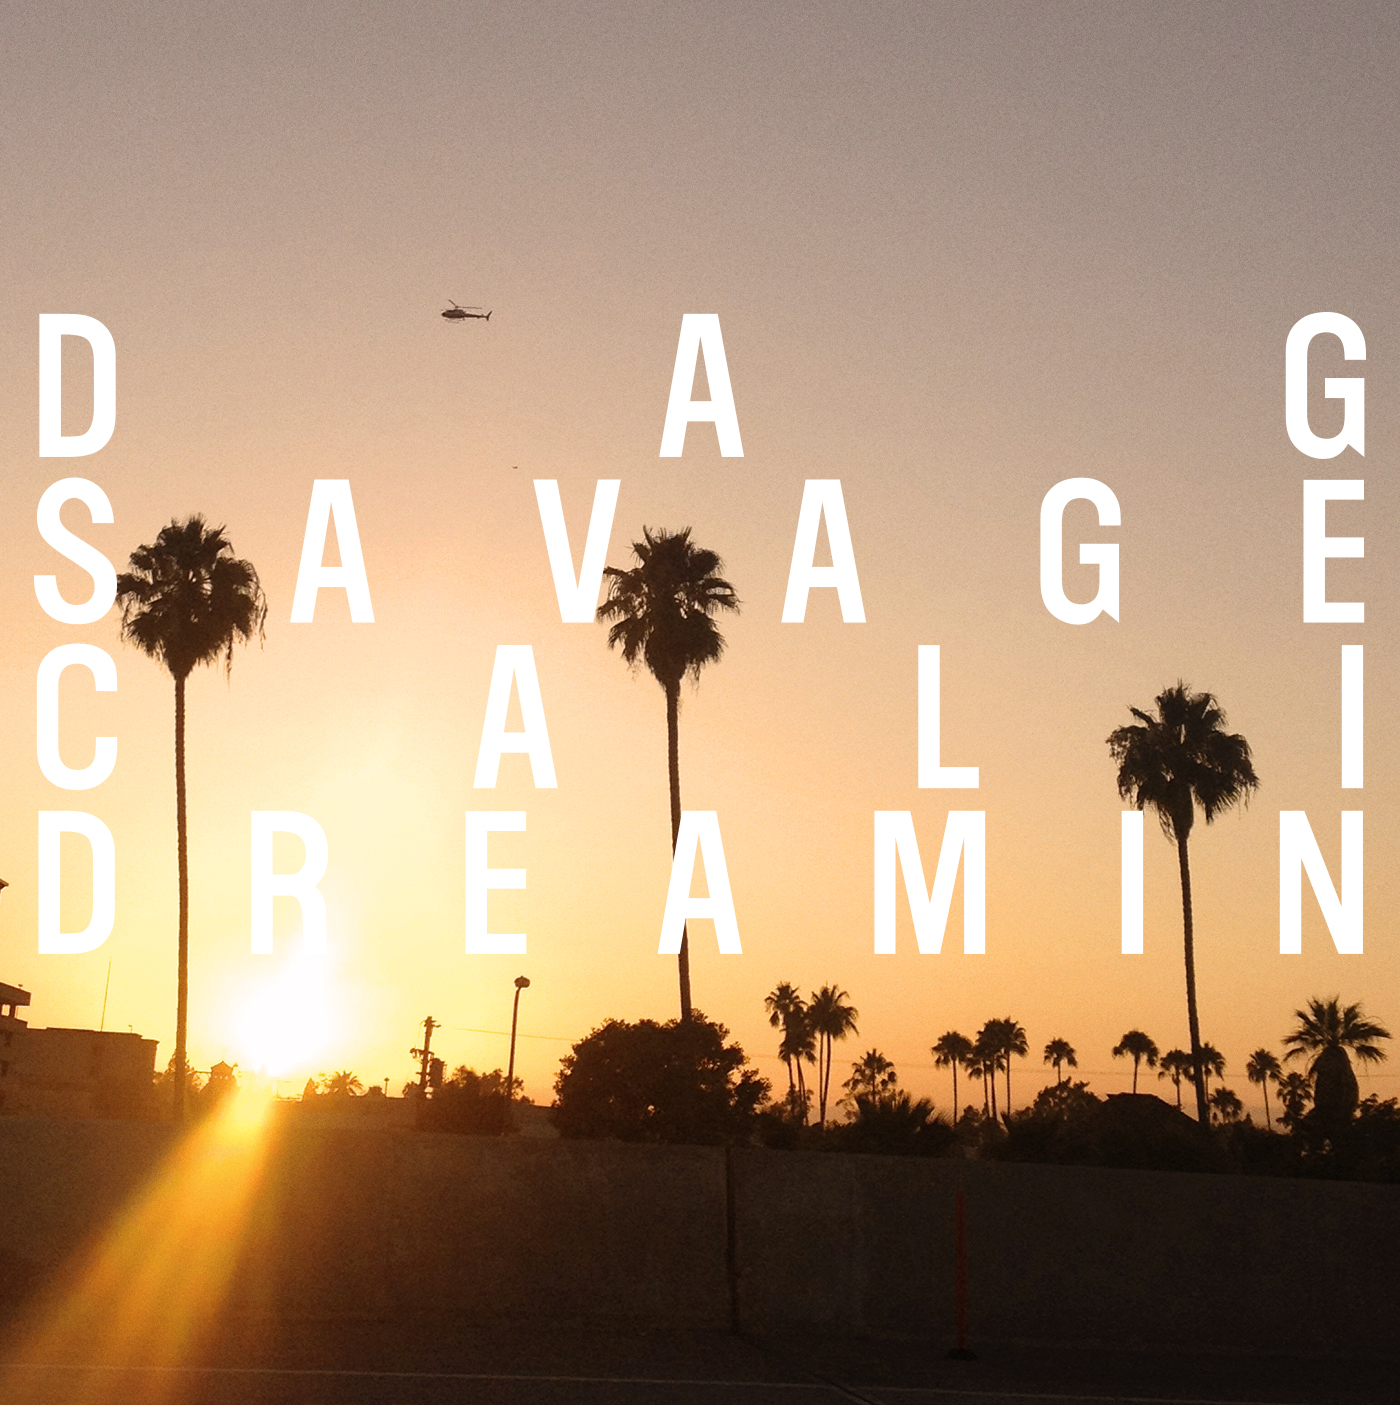 Dag Savage (Johaz x Exile) - "Cali Dreamin" ft. Fashawn & Co$$